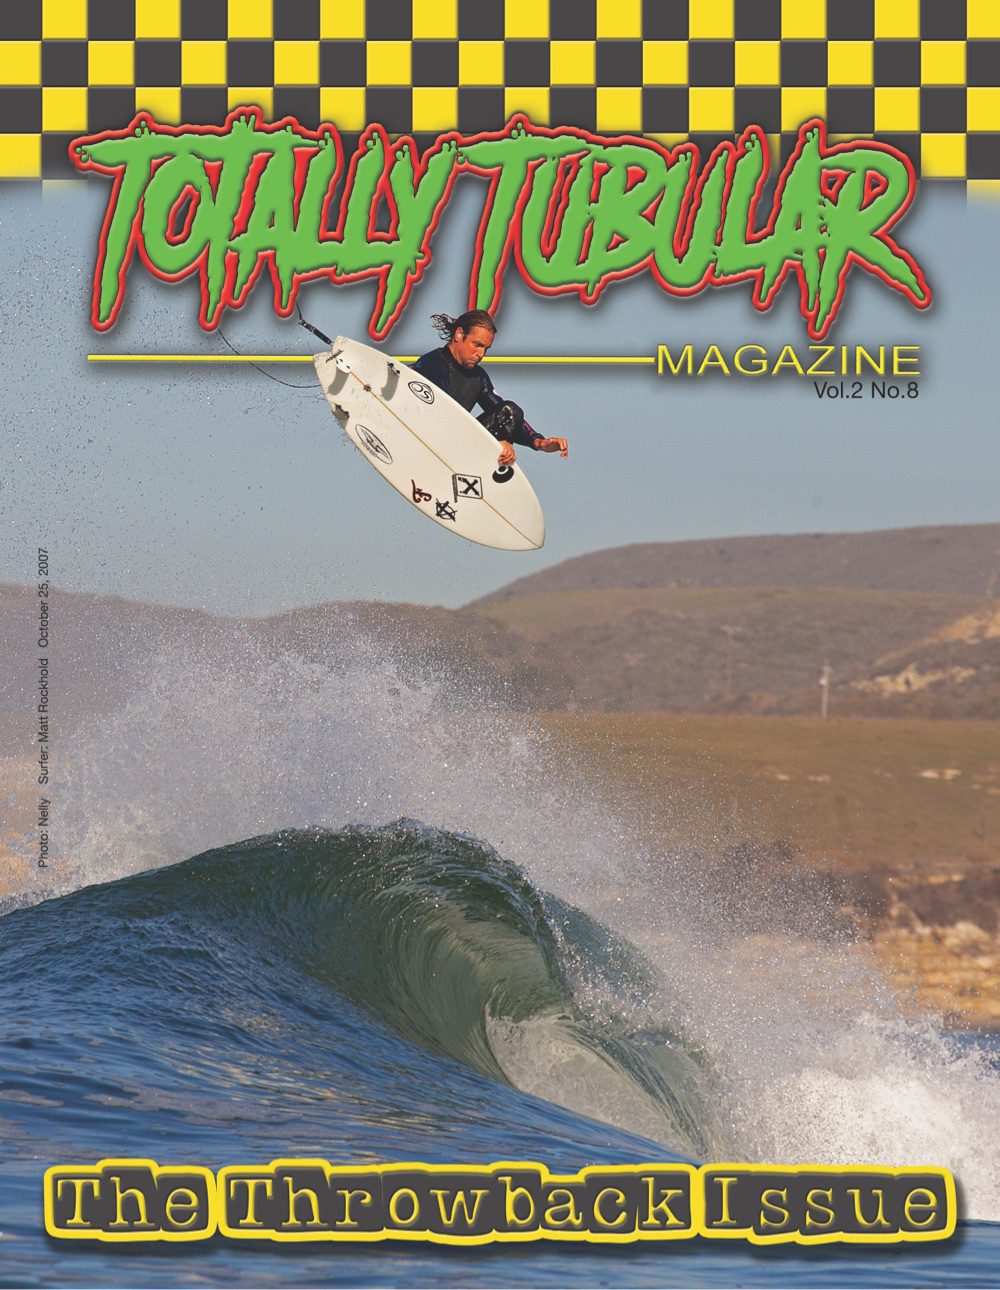 Totally Tubular Magazine Issue 8 cover with Matt Rockhold